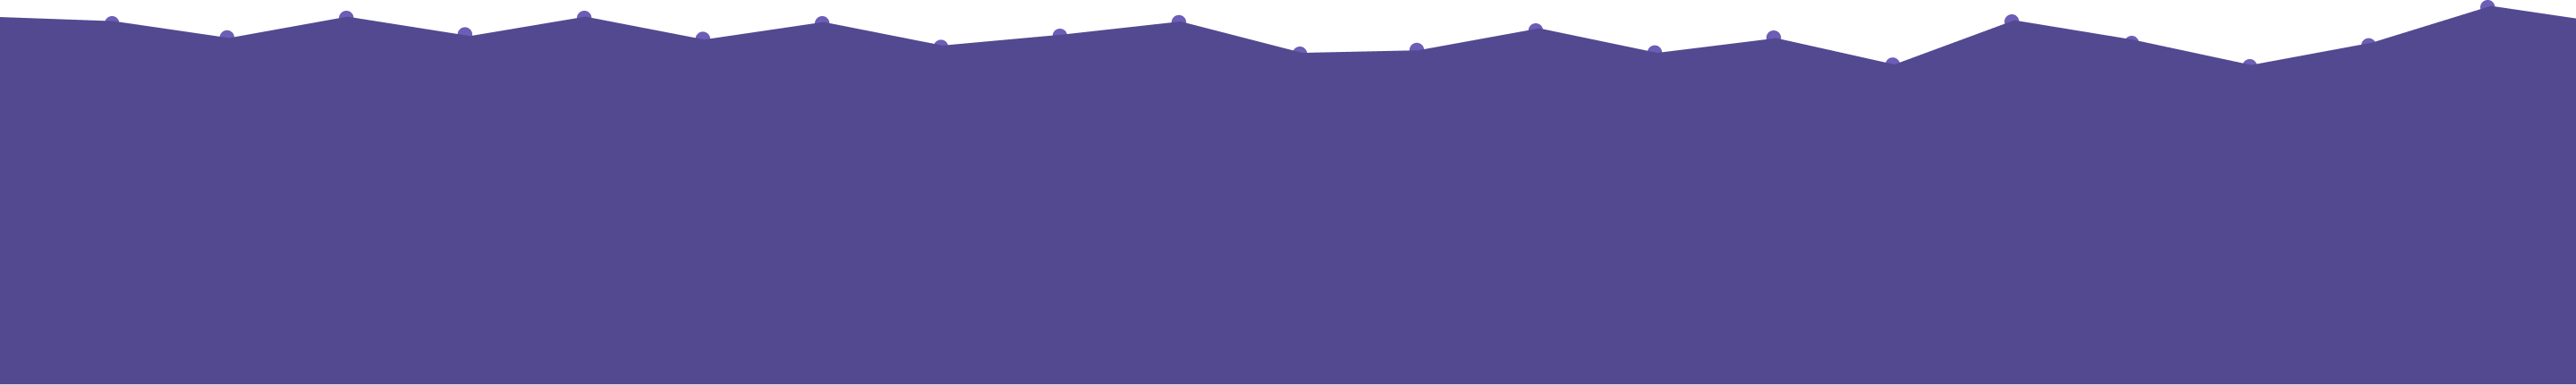 purple line graph background